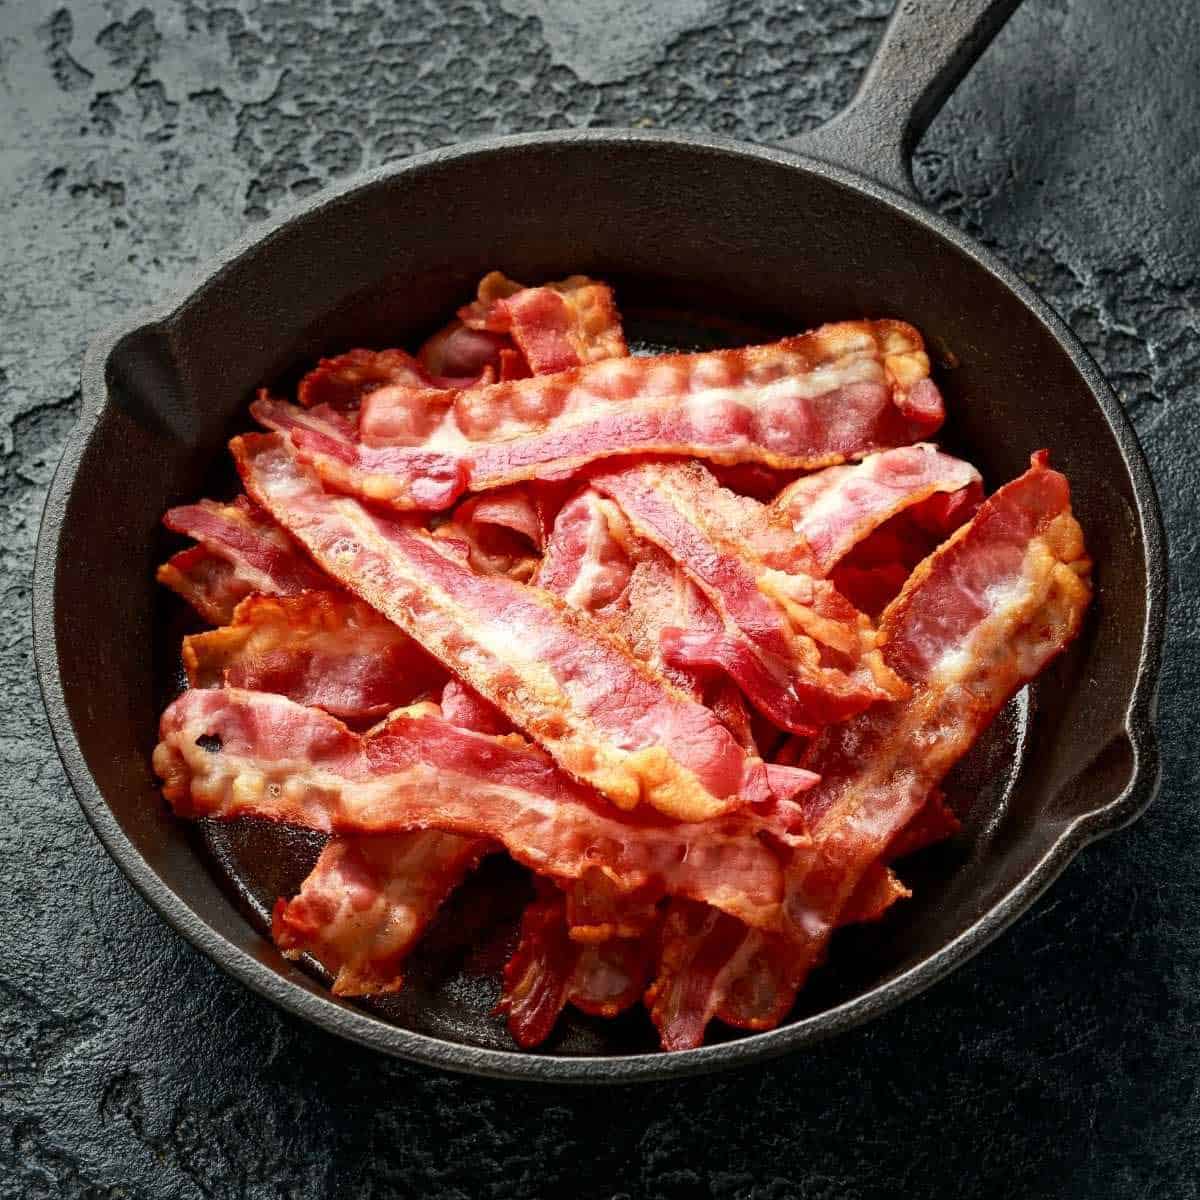 https://bensabaconlovers.com/wp-content/uploads/2022/04/best-frying-pan-bacon.jpg